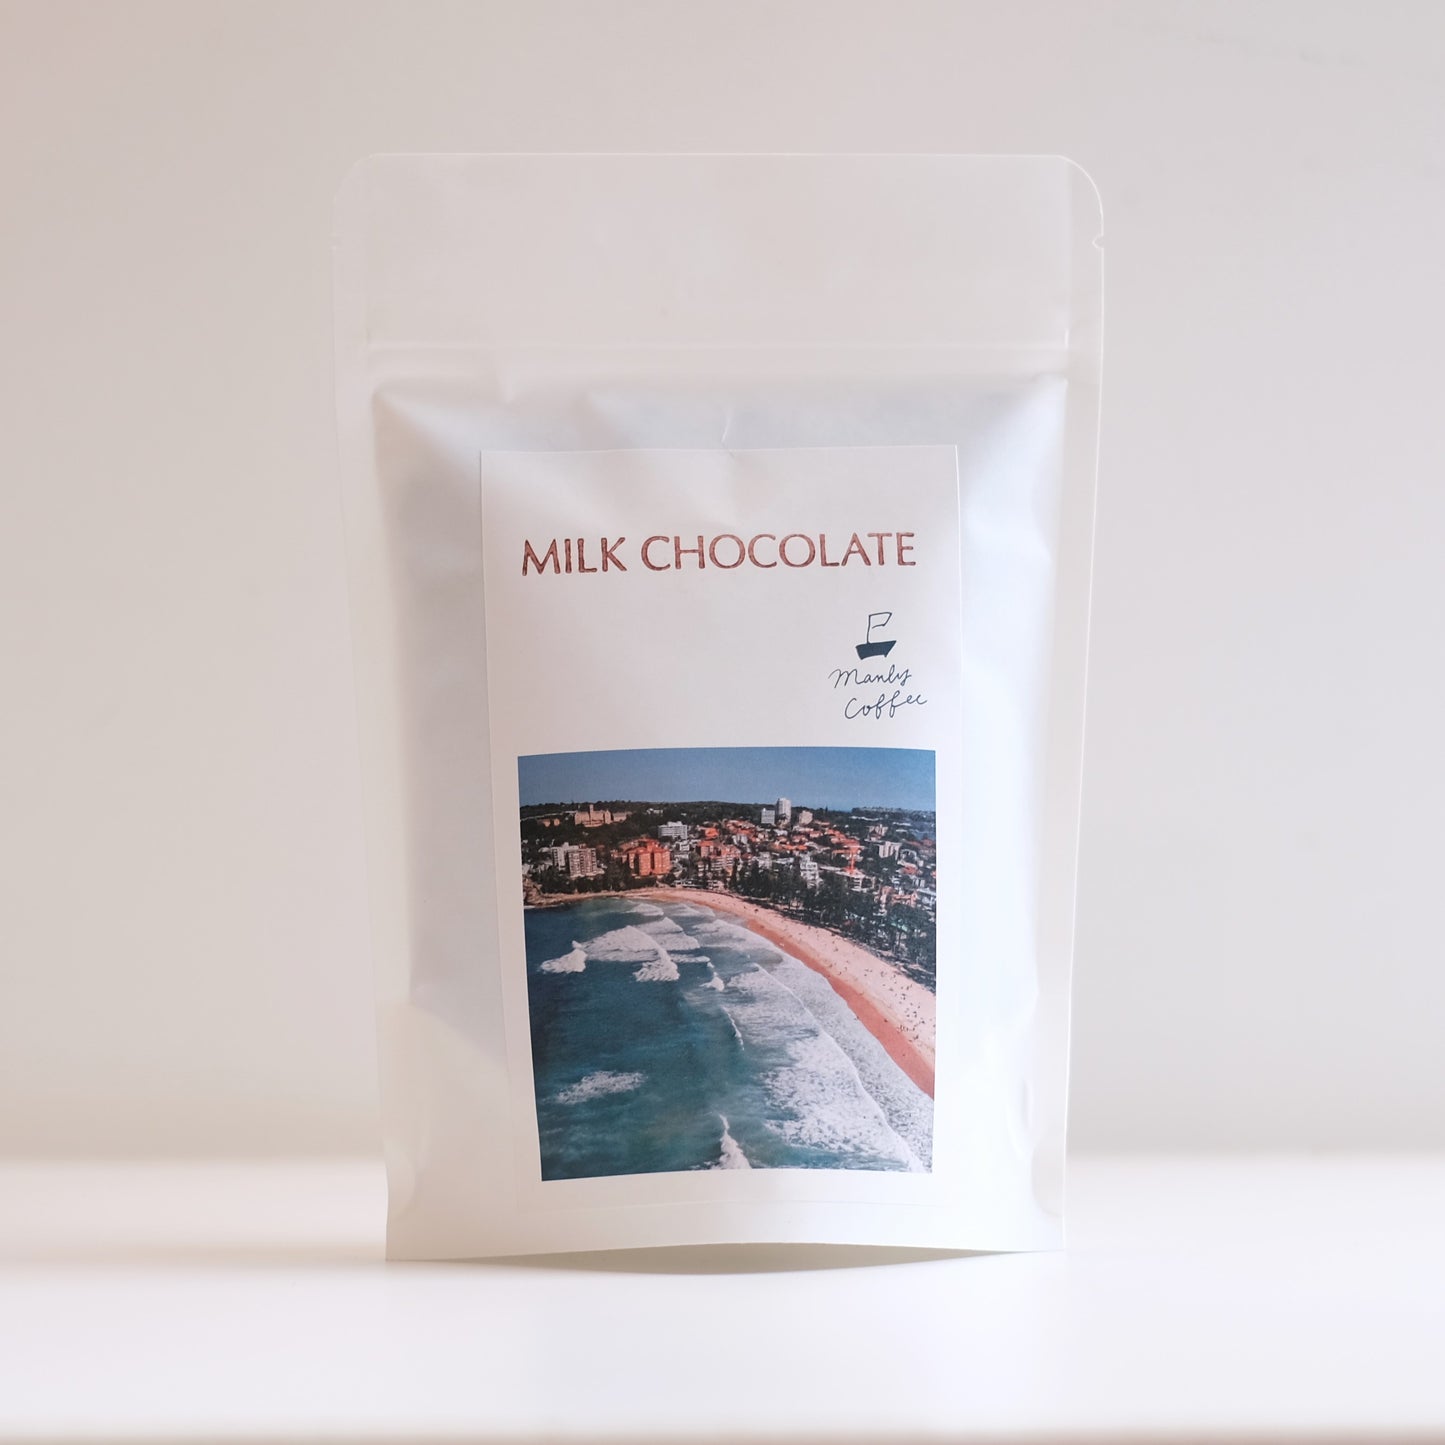 [Slightly bitter] (medium roasted) MILK CHOCOLATE Milk chocolate 